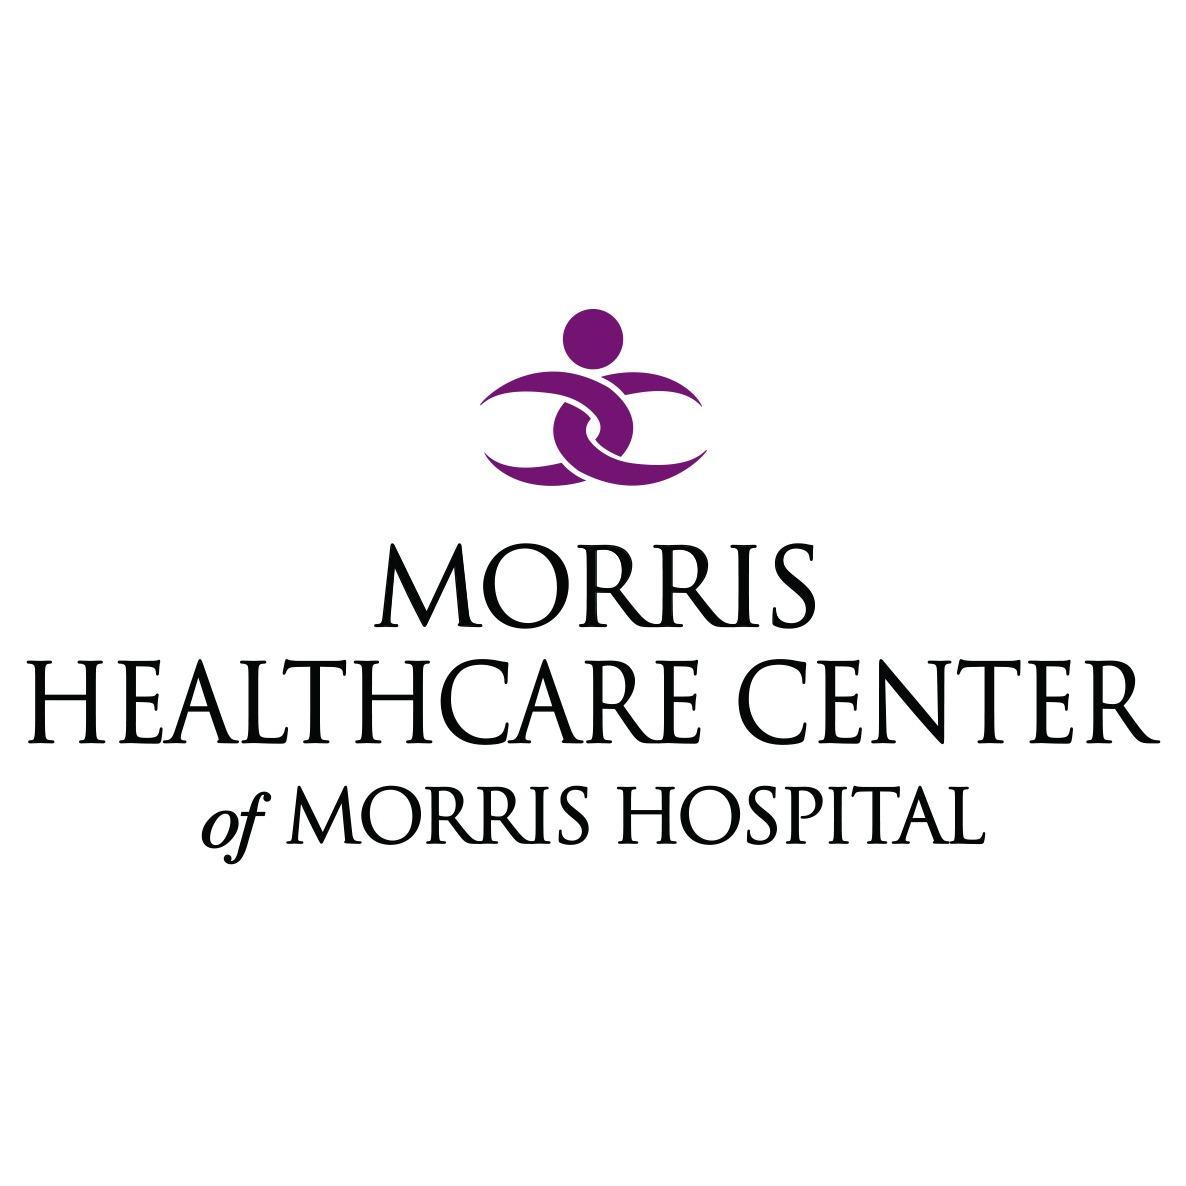 Morris Healthcare Center of Morris Hospital - W. Route 6 - Morris, IL 60450 - (815)942-5474 | ShowMeLocal.com